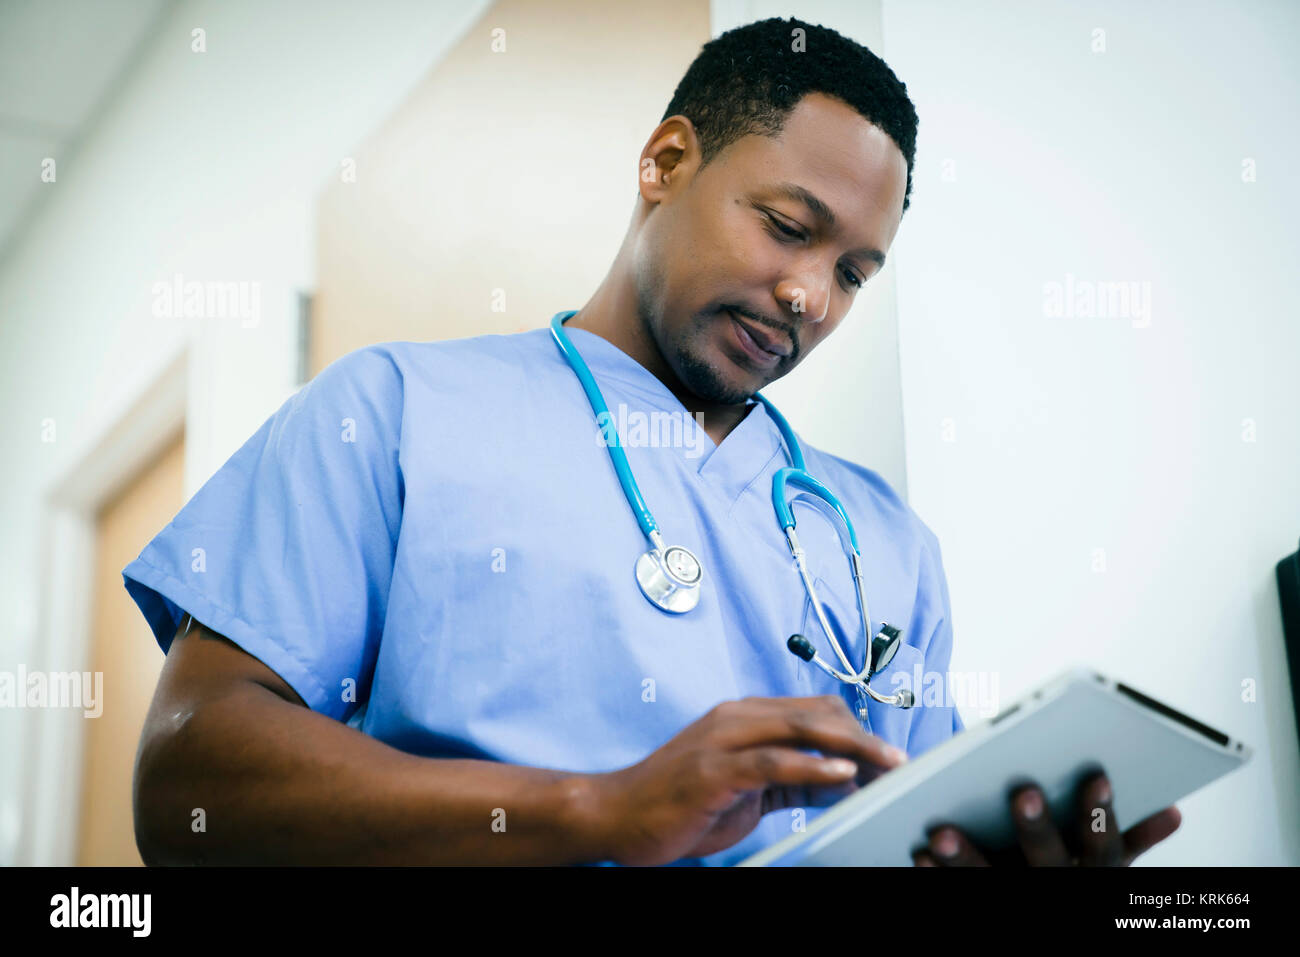 Black nurse using digital tablet in hospital Stock Photo